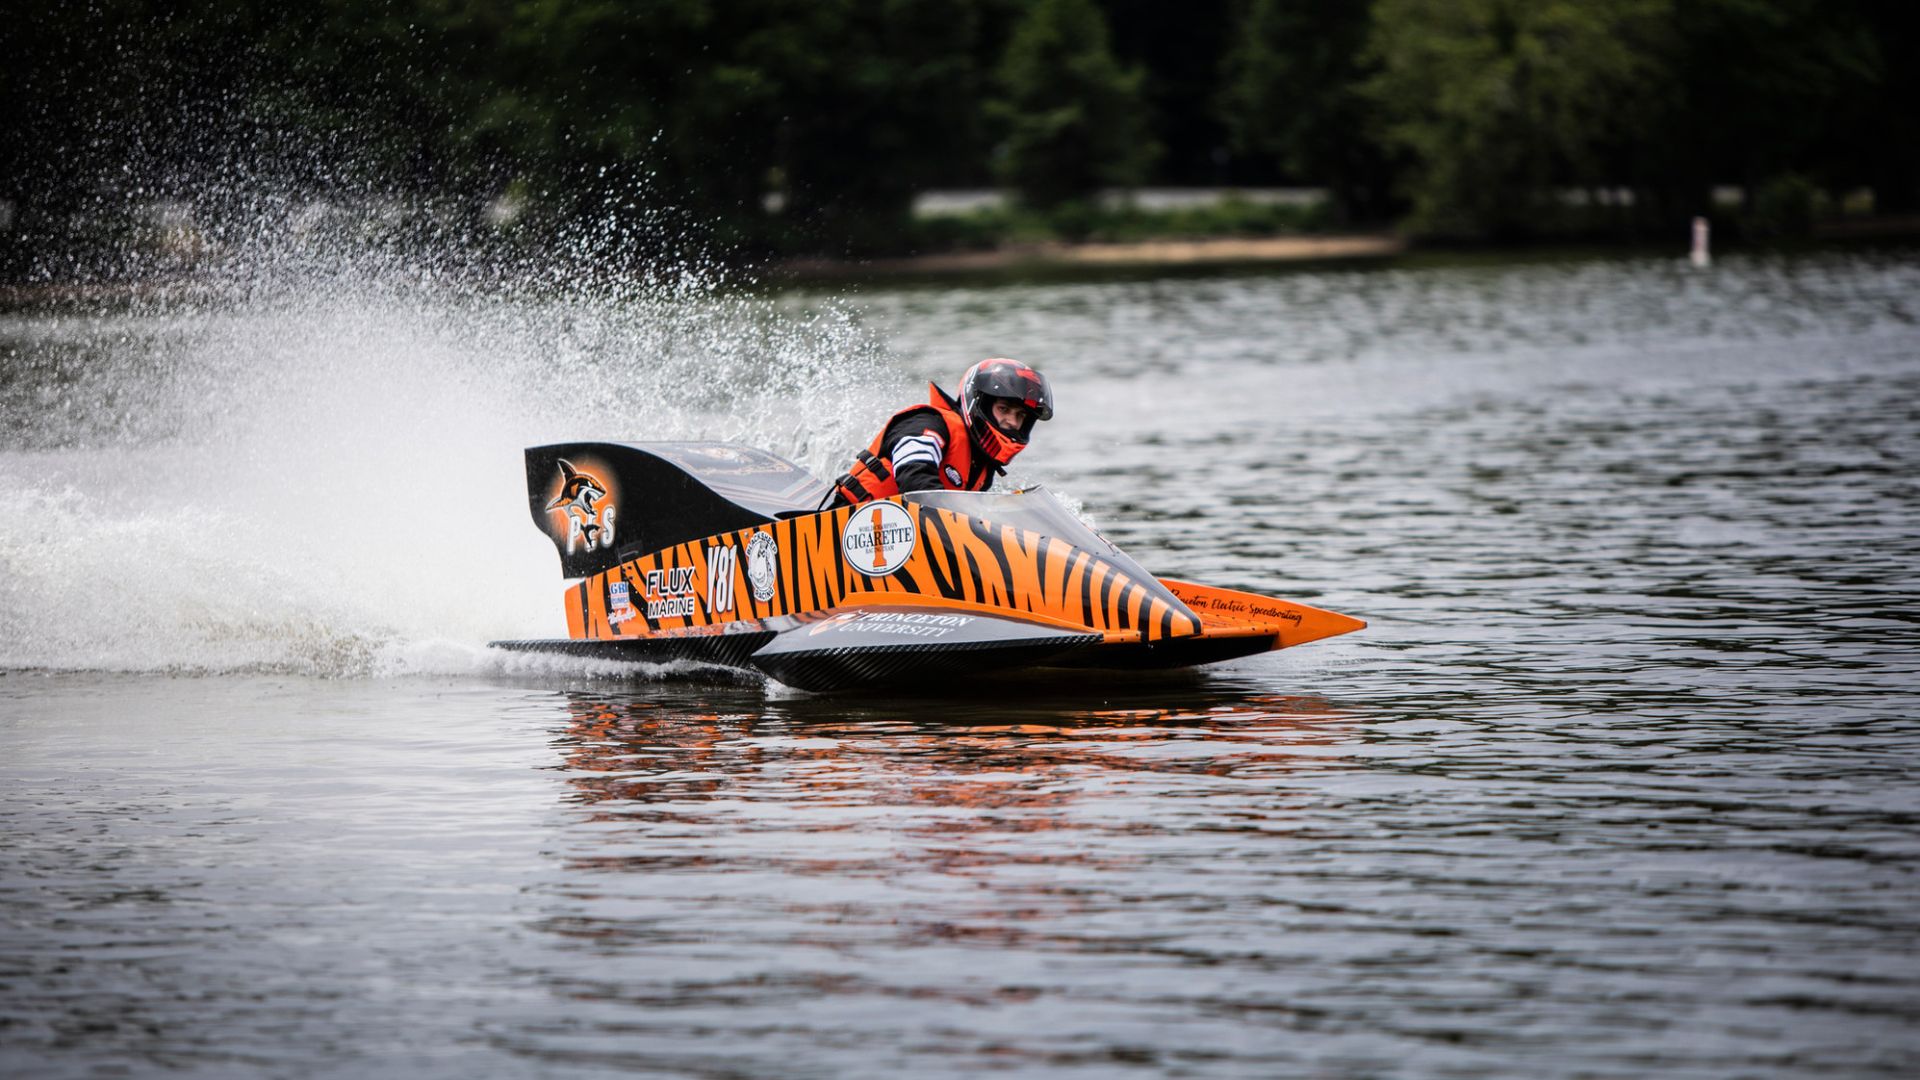 Princeton Electric Speedboating: Γρήγορο σαν... τον άνεμο!